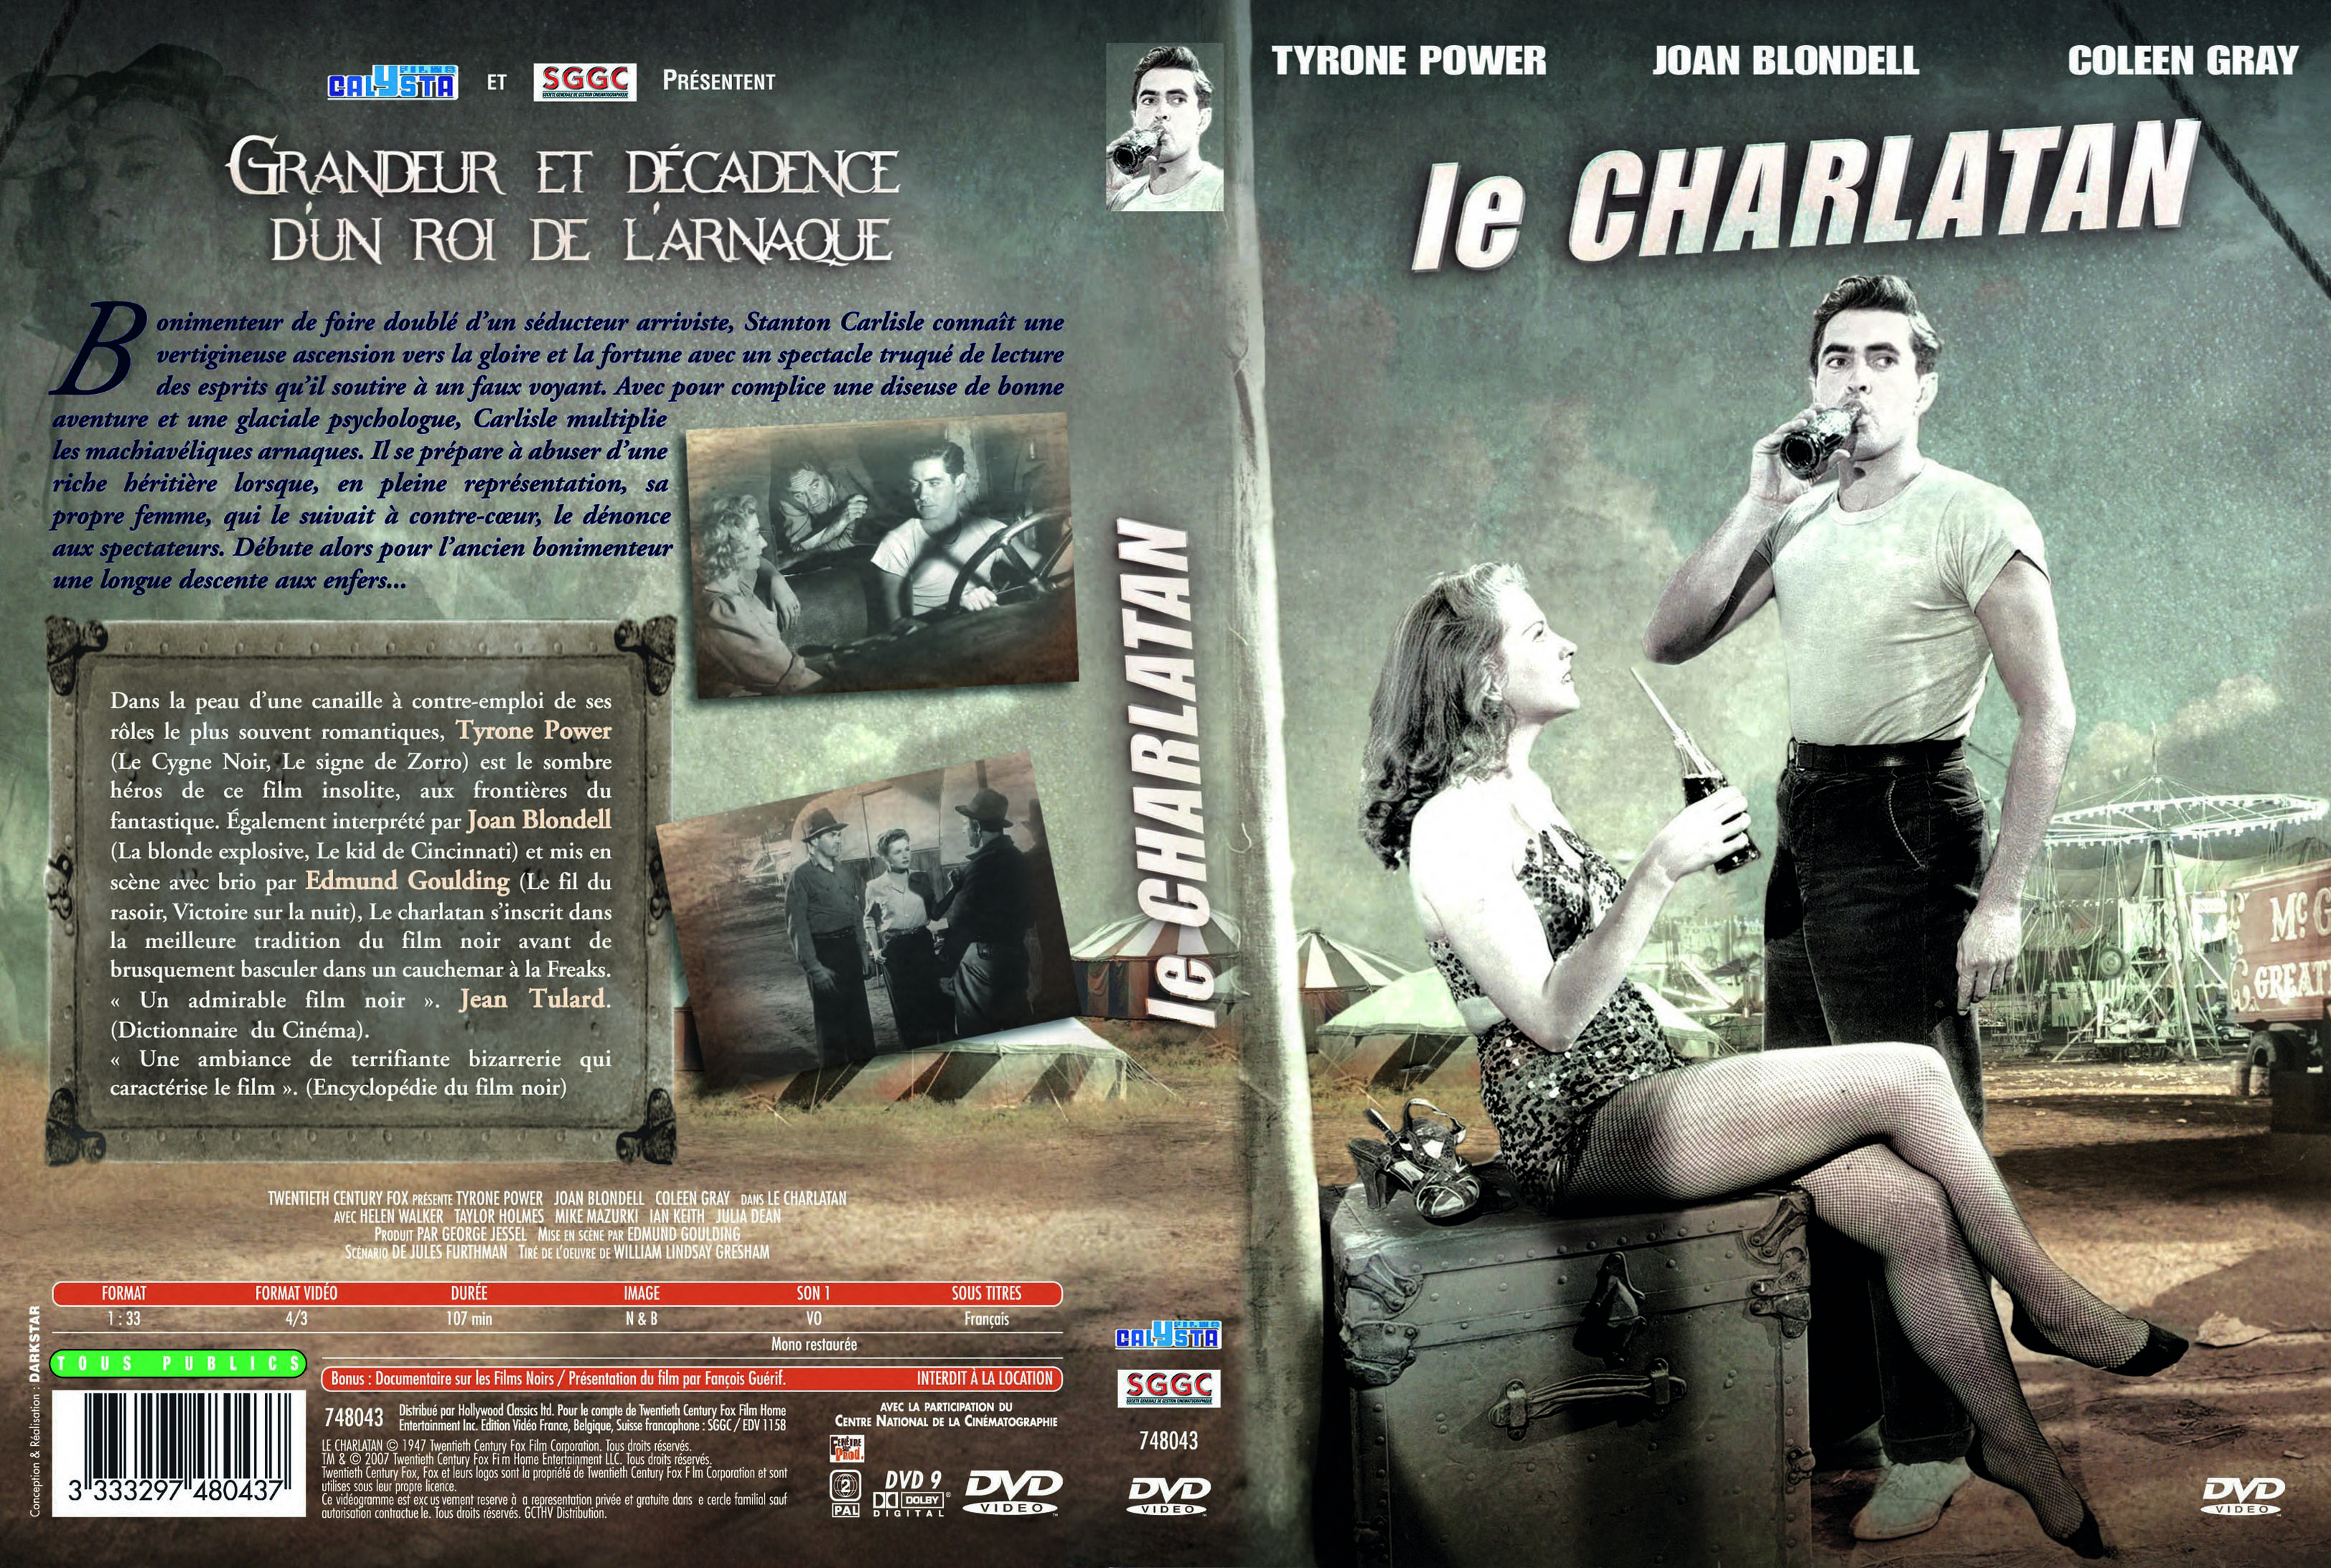 Jaquette DVD Le charlatan custom